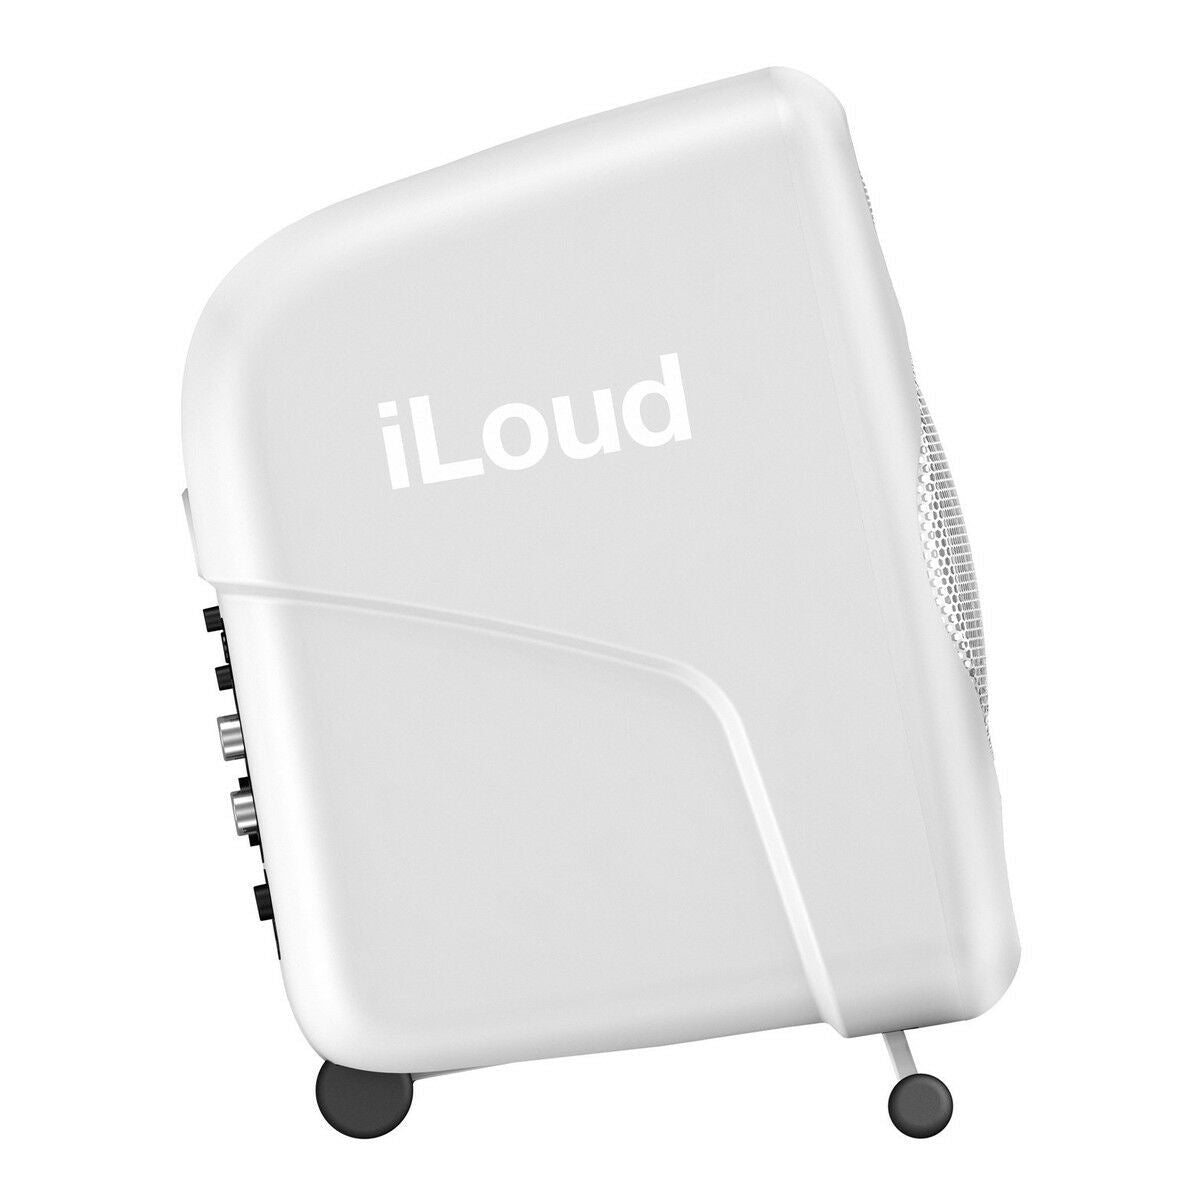 New IK Multimedia iLoud Micro Monitors (Special Edition White)